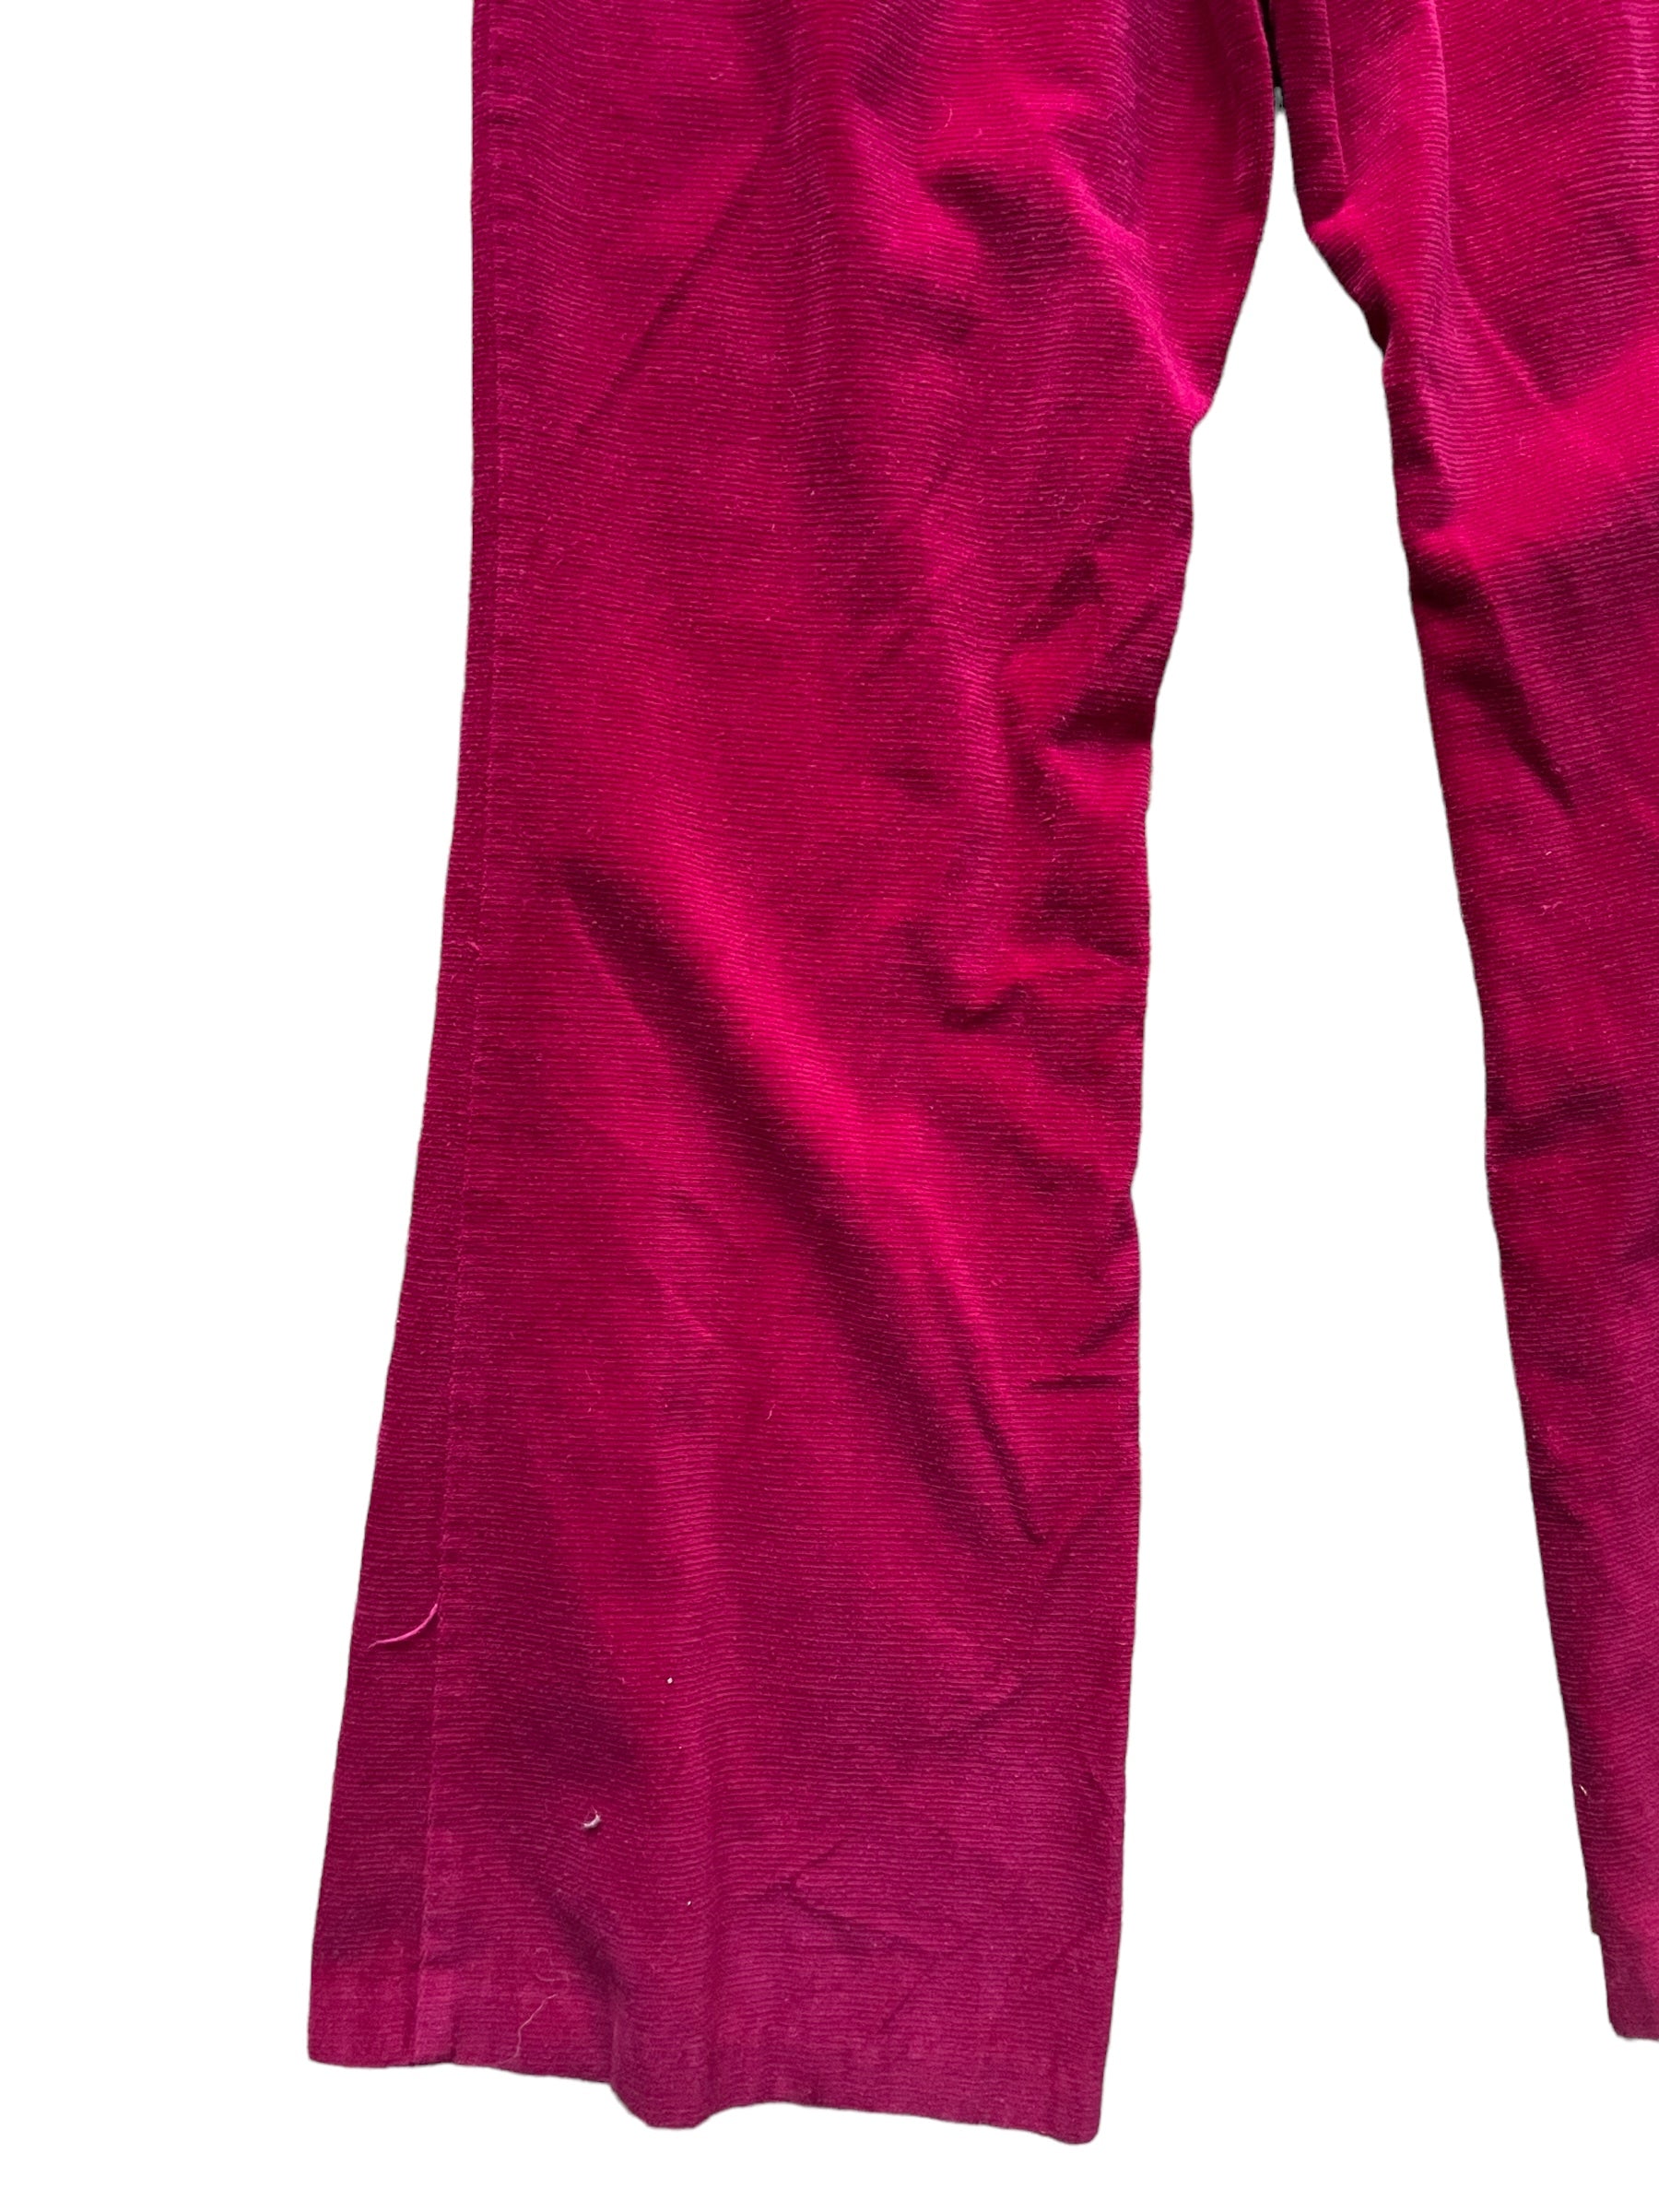 Back left pant leg of Vintage 1970s Red Velvet Bell Bottoms sz S | Barn Owl Vintage Seattle | Vintage 70s Pants